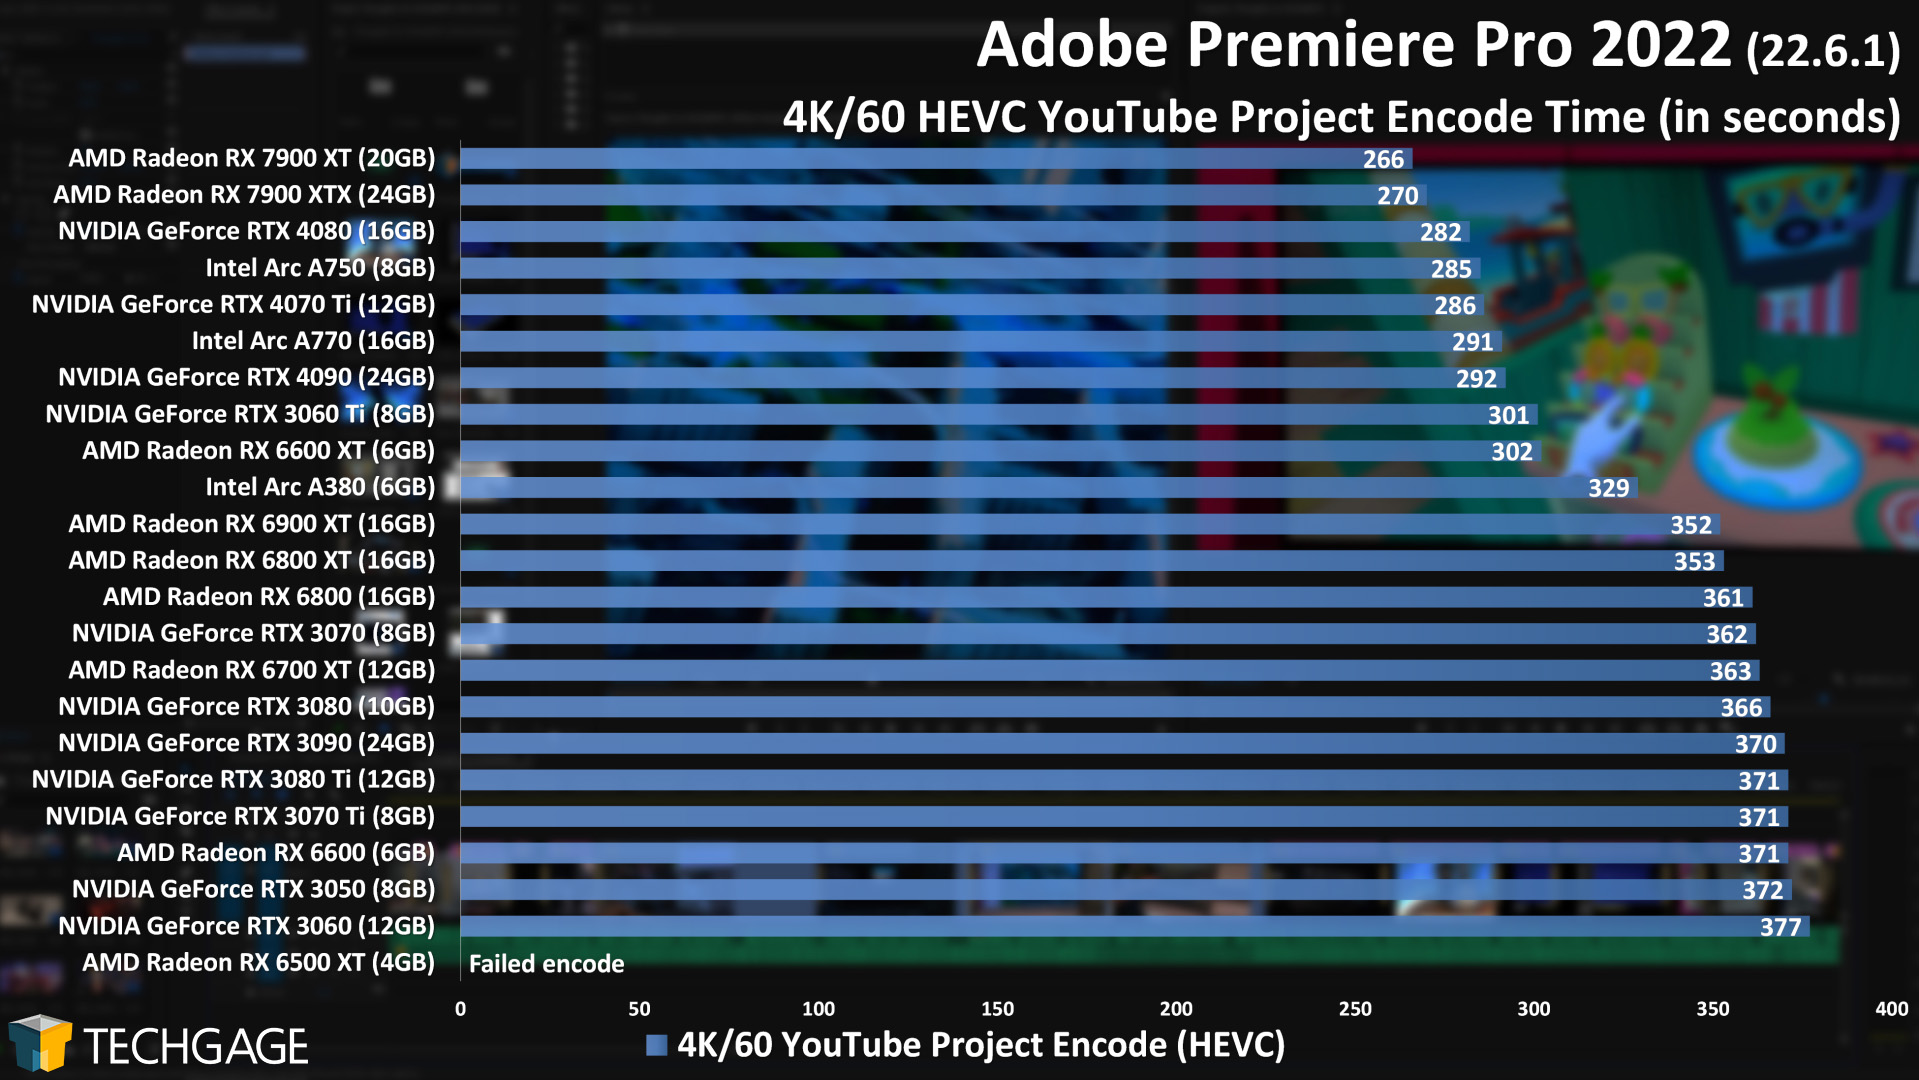 Adobe Premiere Pro - GPU Encoding Performance (4K YouTube Project)